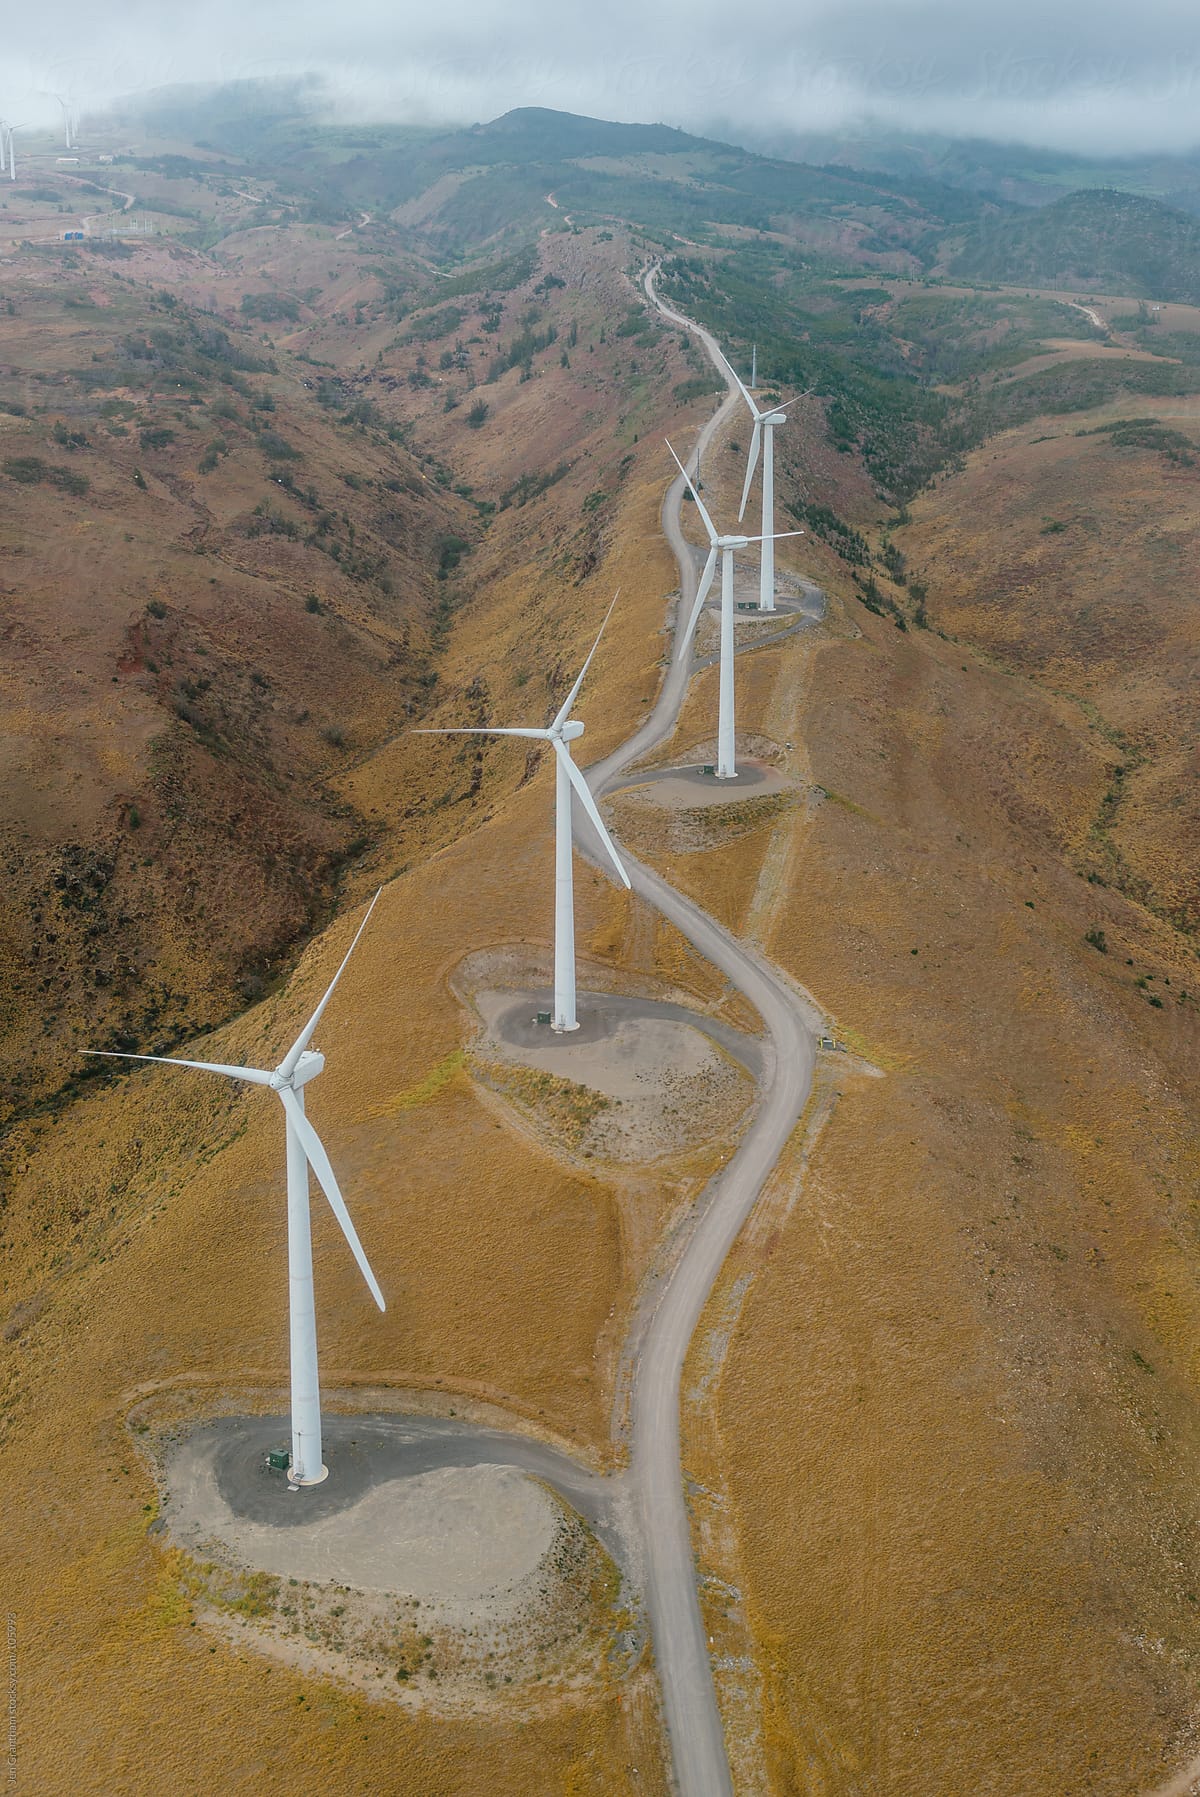 Wind Farm in Maui, Hawaii